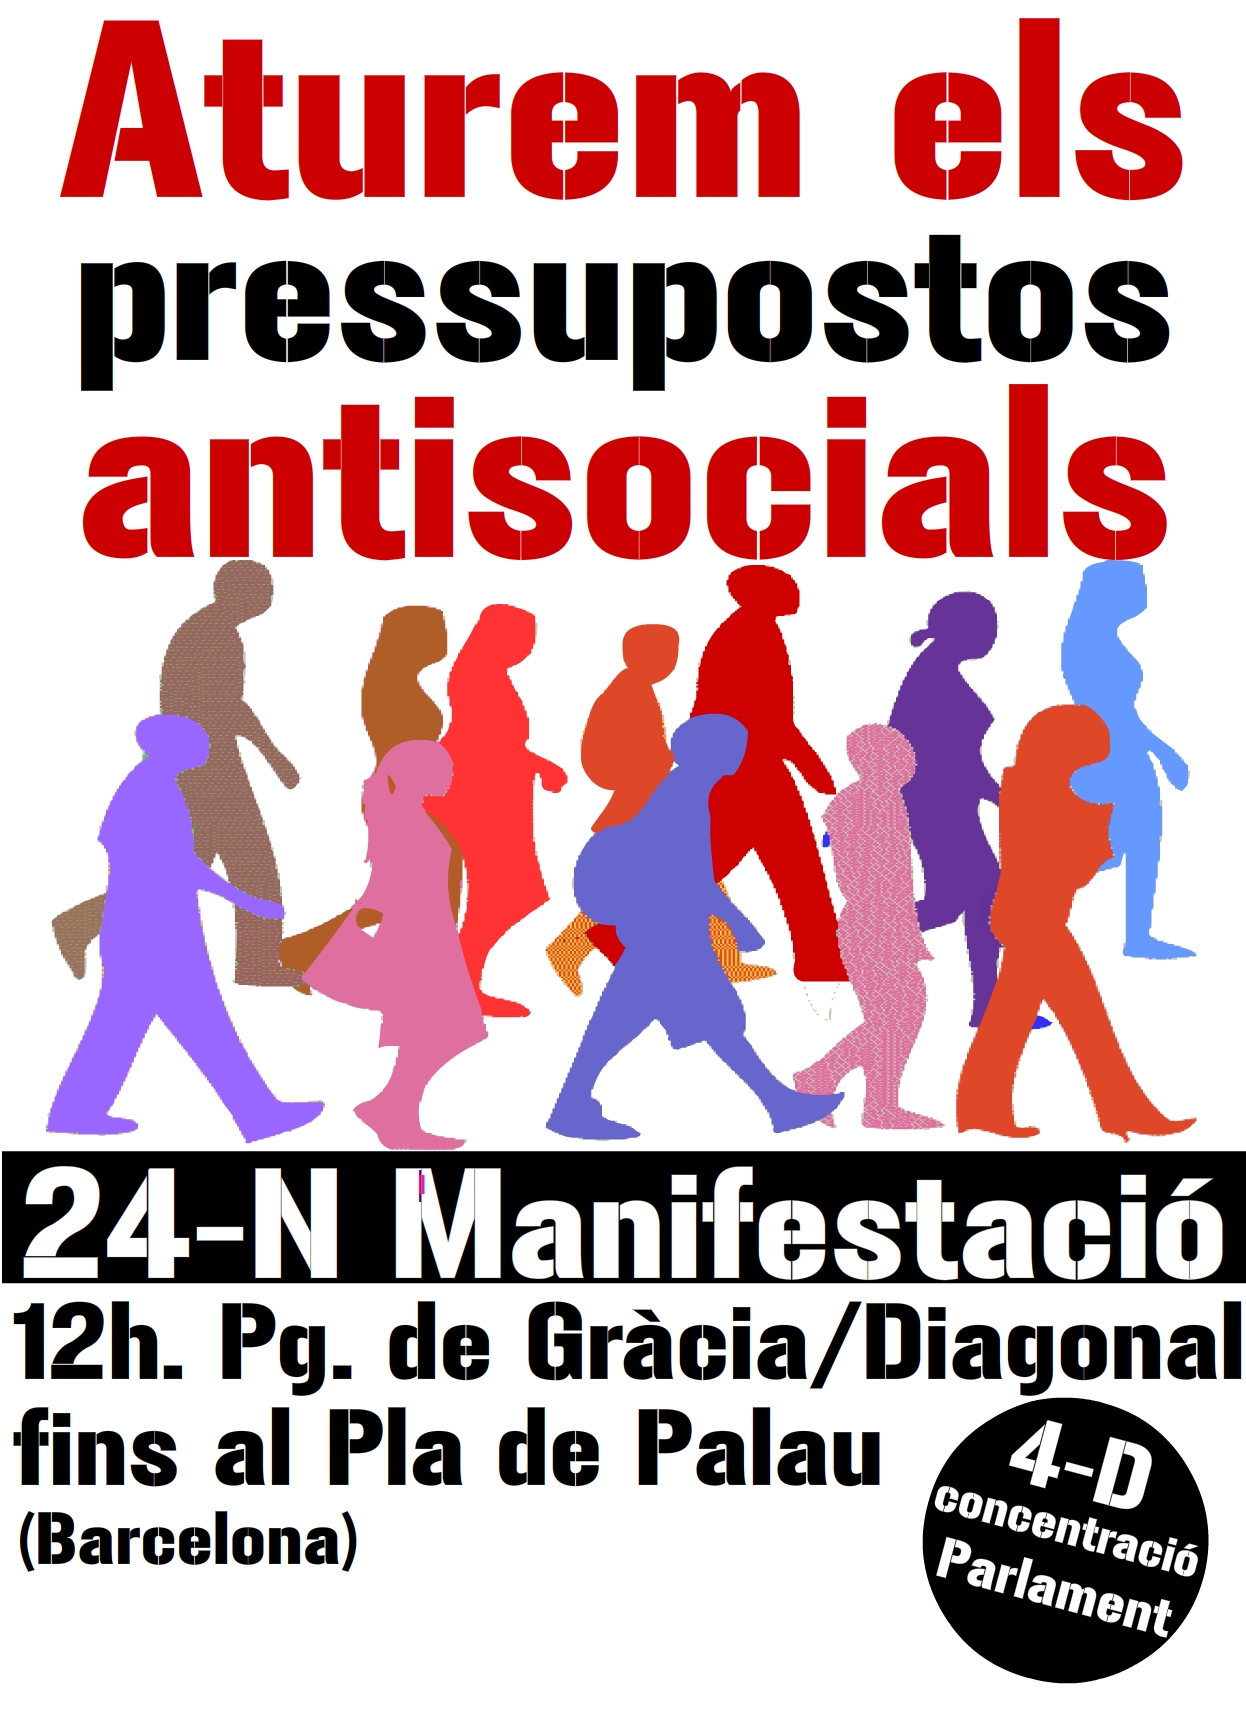 http://www.sosracisme.org/wp-content/uploads/2013/11/ManiPressupostosAntisocials_Cartell.jpg